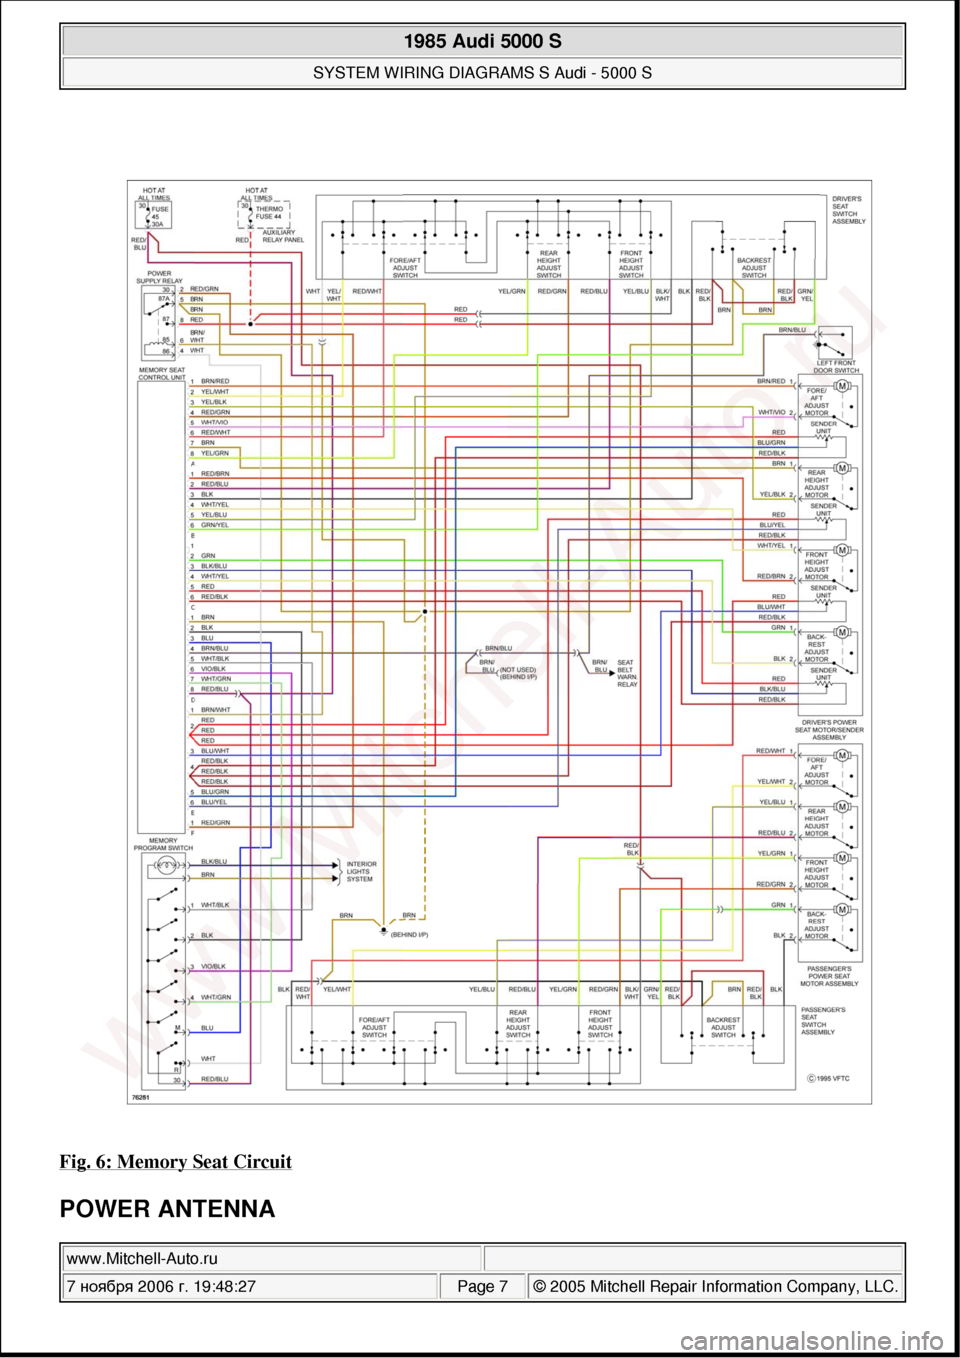 AUDI 5000S 1985 C2 System Wiring Diagram 
Fig. 6: Memory Seat Circuit 
POWER ANTENNA 
 
1985 Audi 5000 S 
SYSTEM WIRING DIAGRAMS S Audi - 5000 S  
www.Mitchell-Auto.ru  
7 ноября  2006 г. 19:48:27Page 7 © 2005 Mitchell Repair Informa